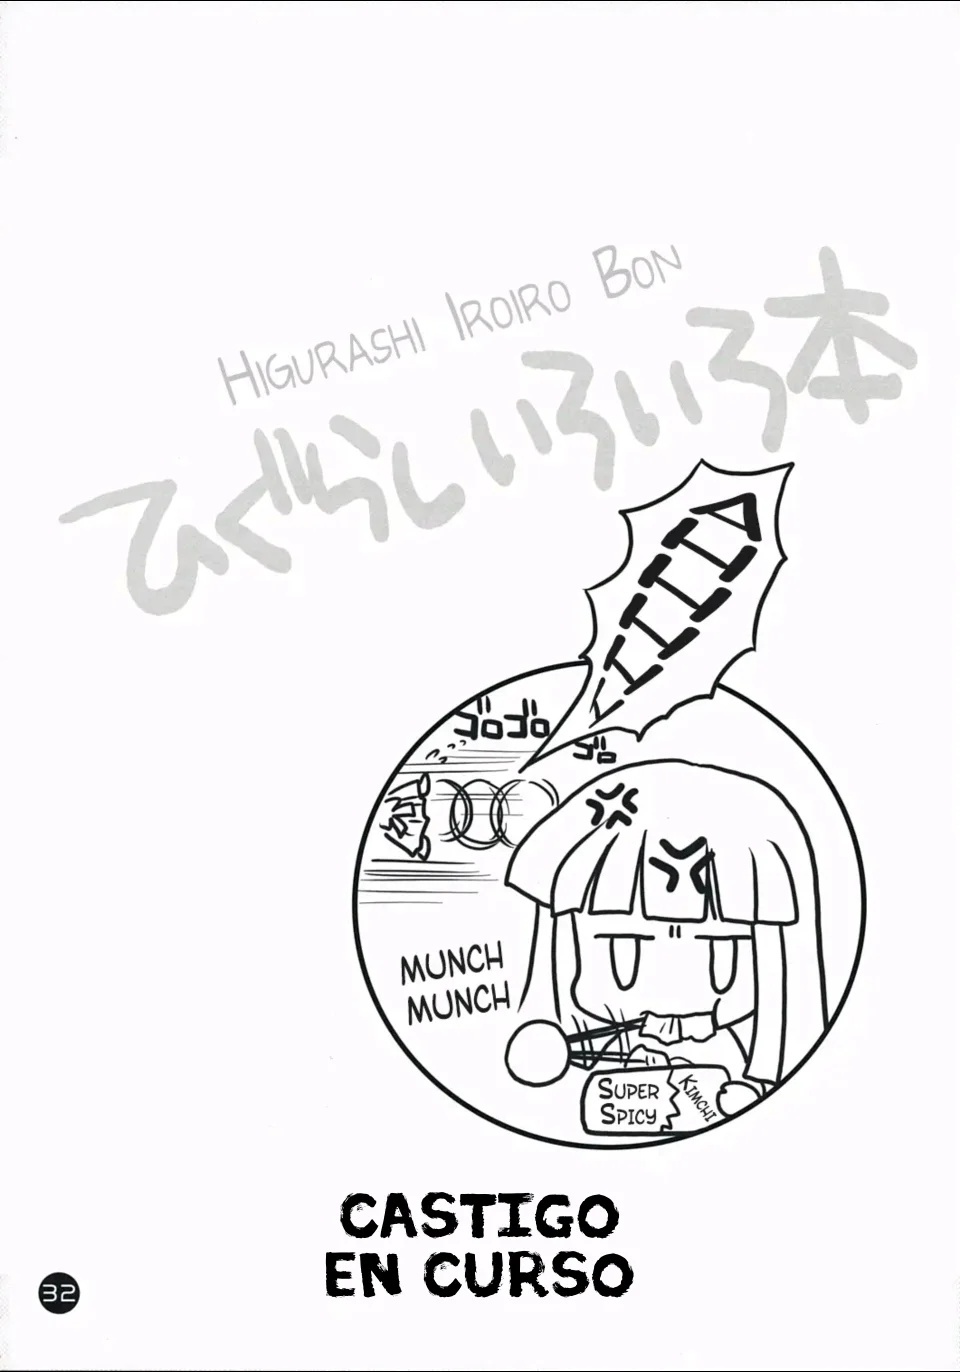 Higurashi Iroiro Bon - 31